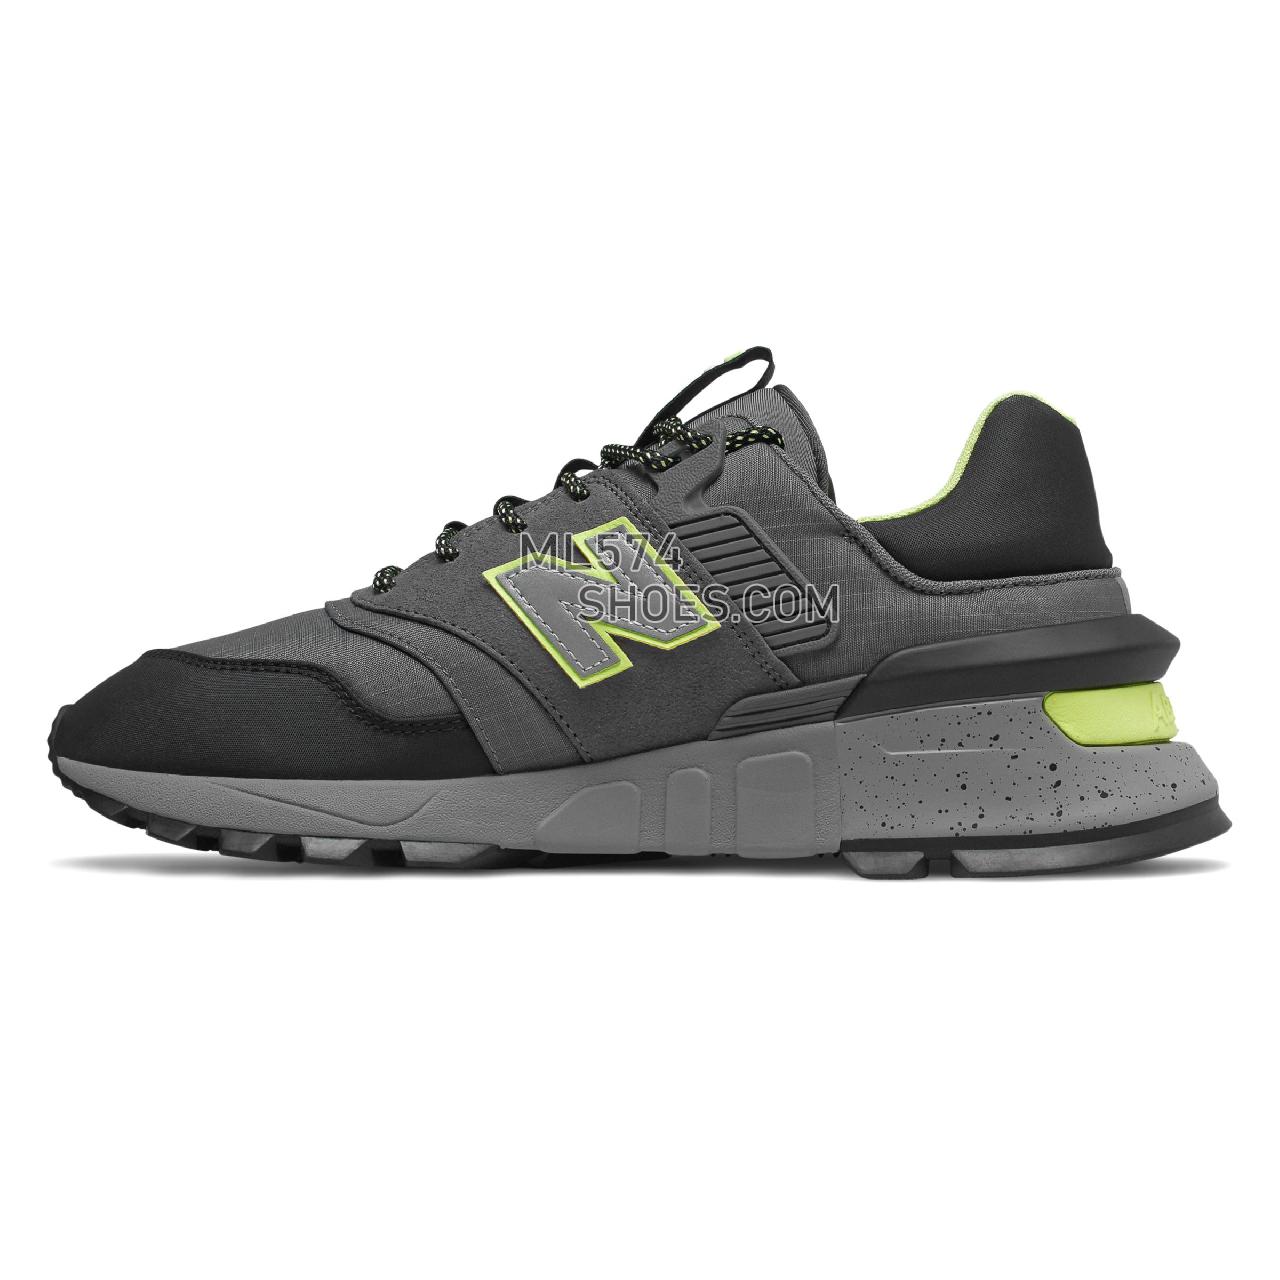 New Balance 997 Sport - Men's Sport Style Sneakers - Castlerock with Black and Lemon Slush - MS997SKC